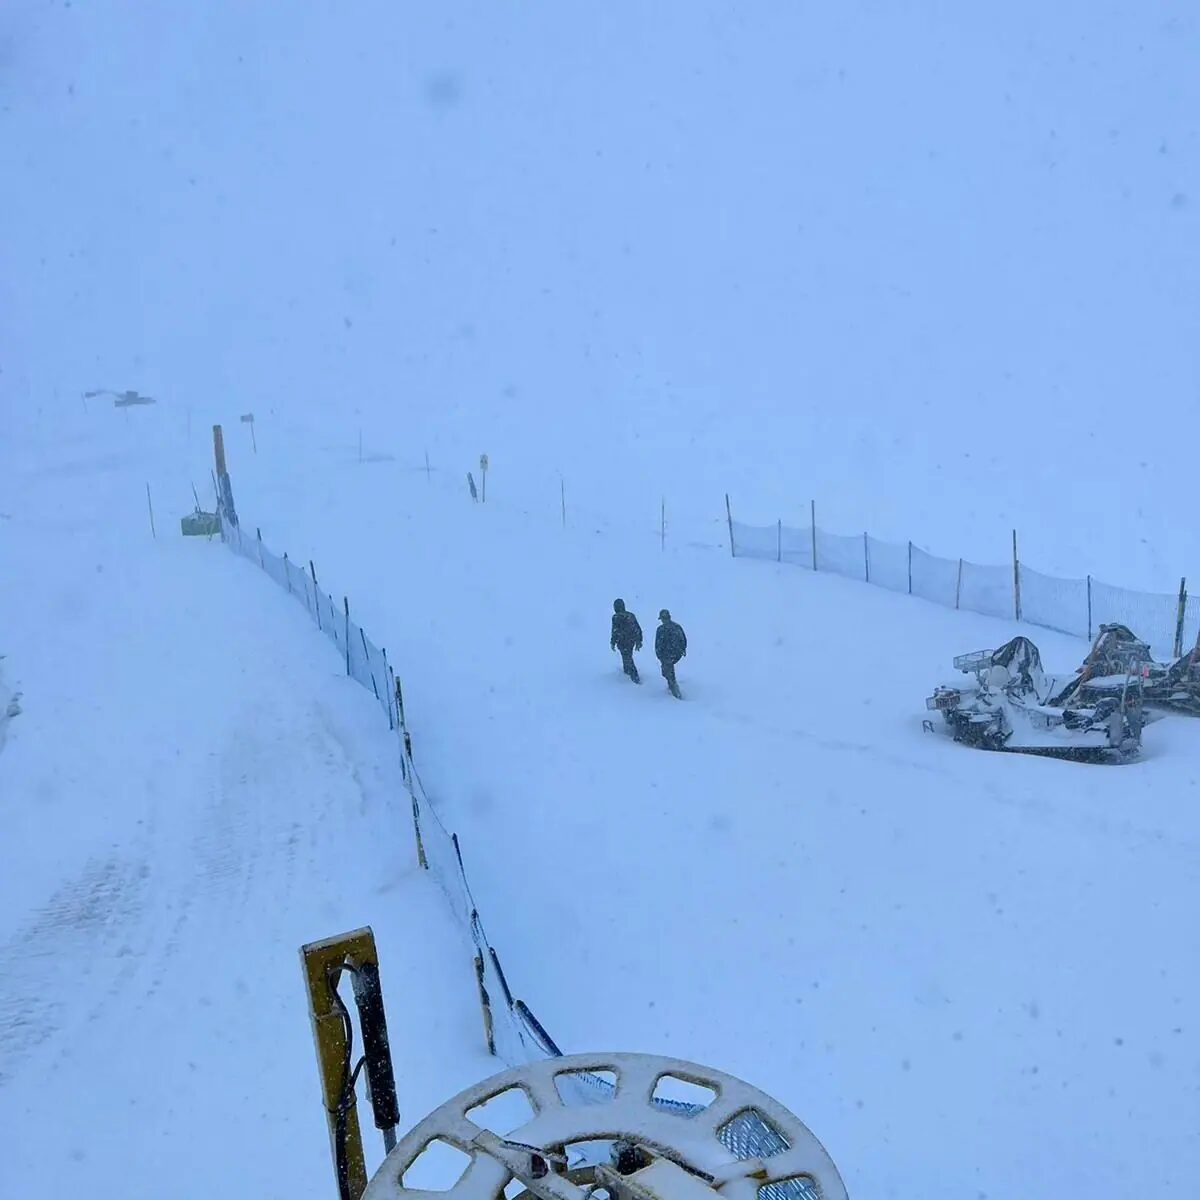 The cross border ski resort Matterhorn Ski Paradise woke up to a nice dump of snow this morning.